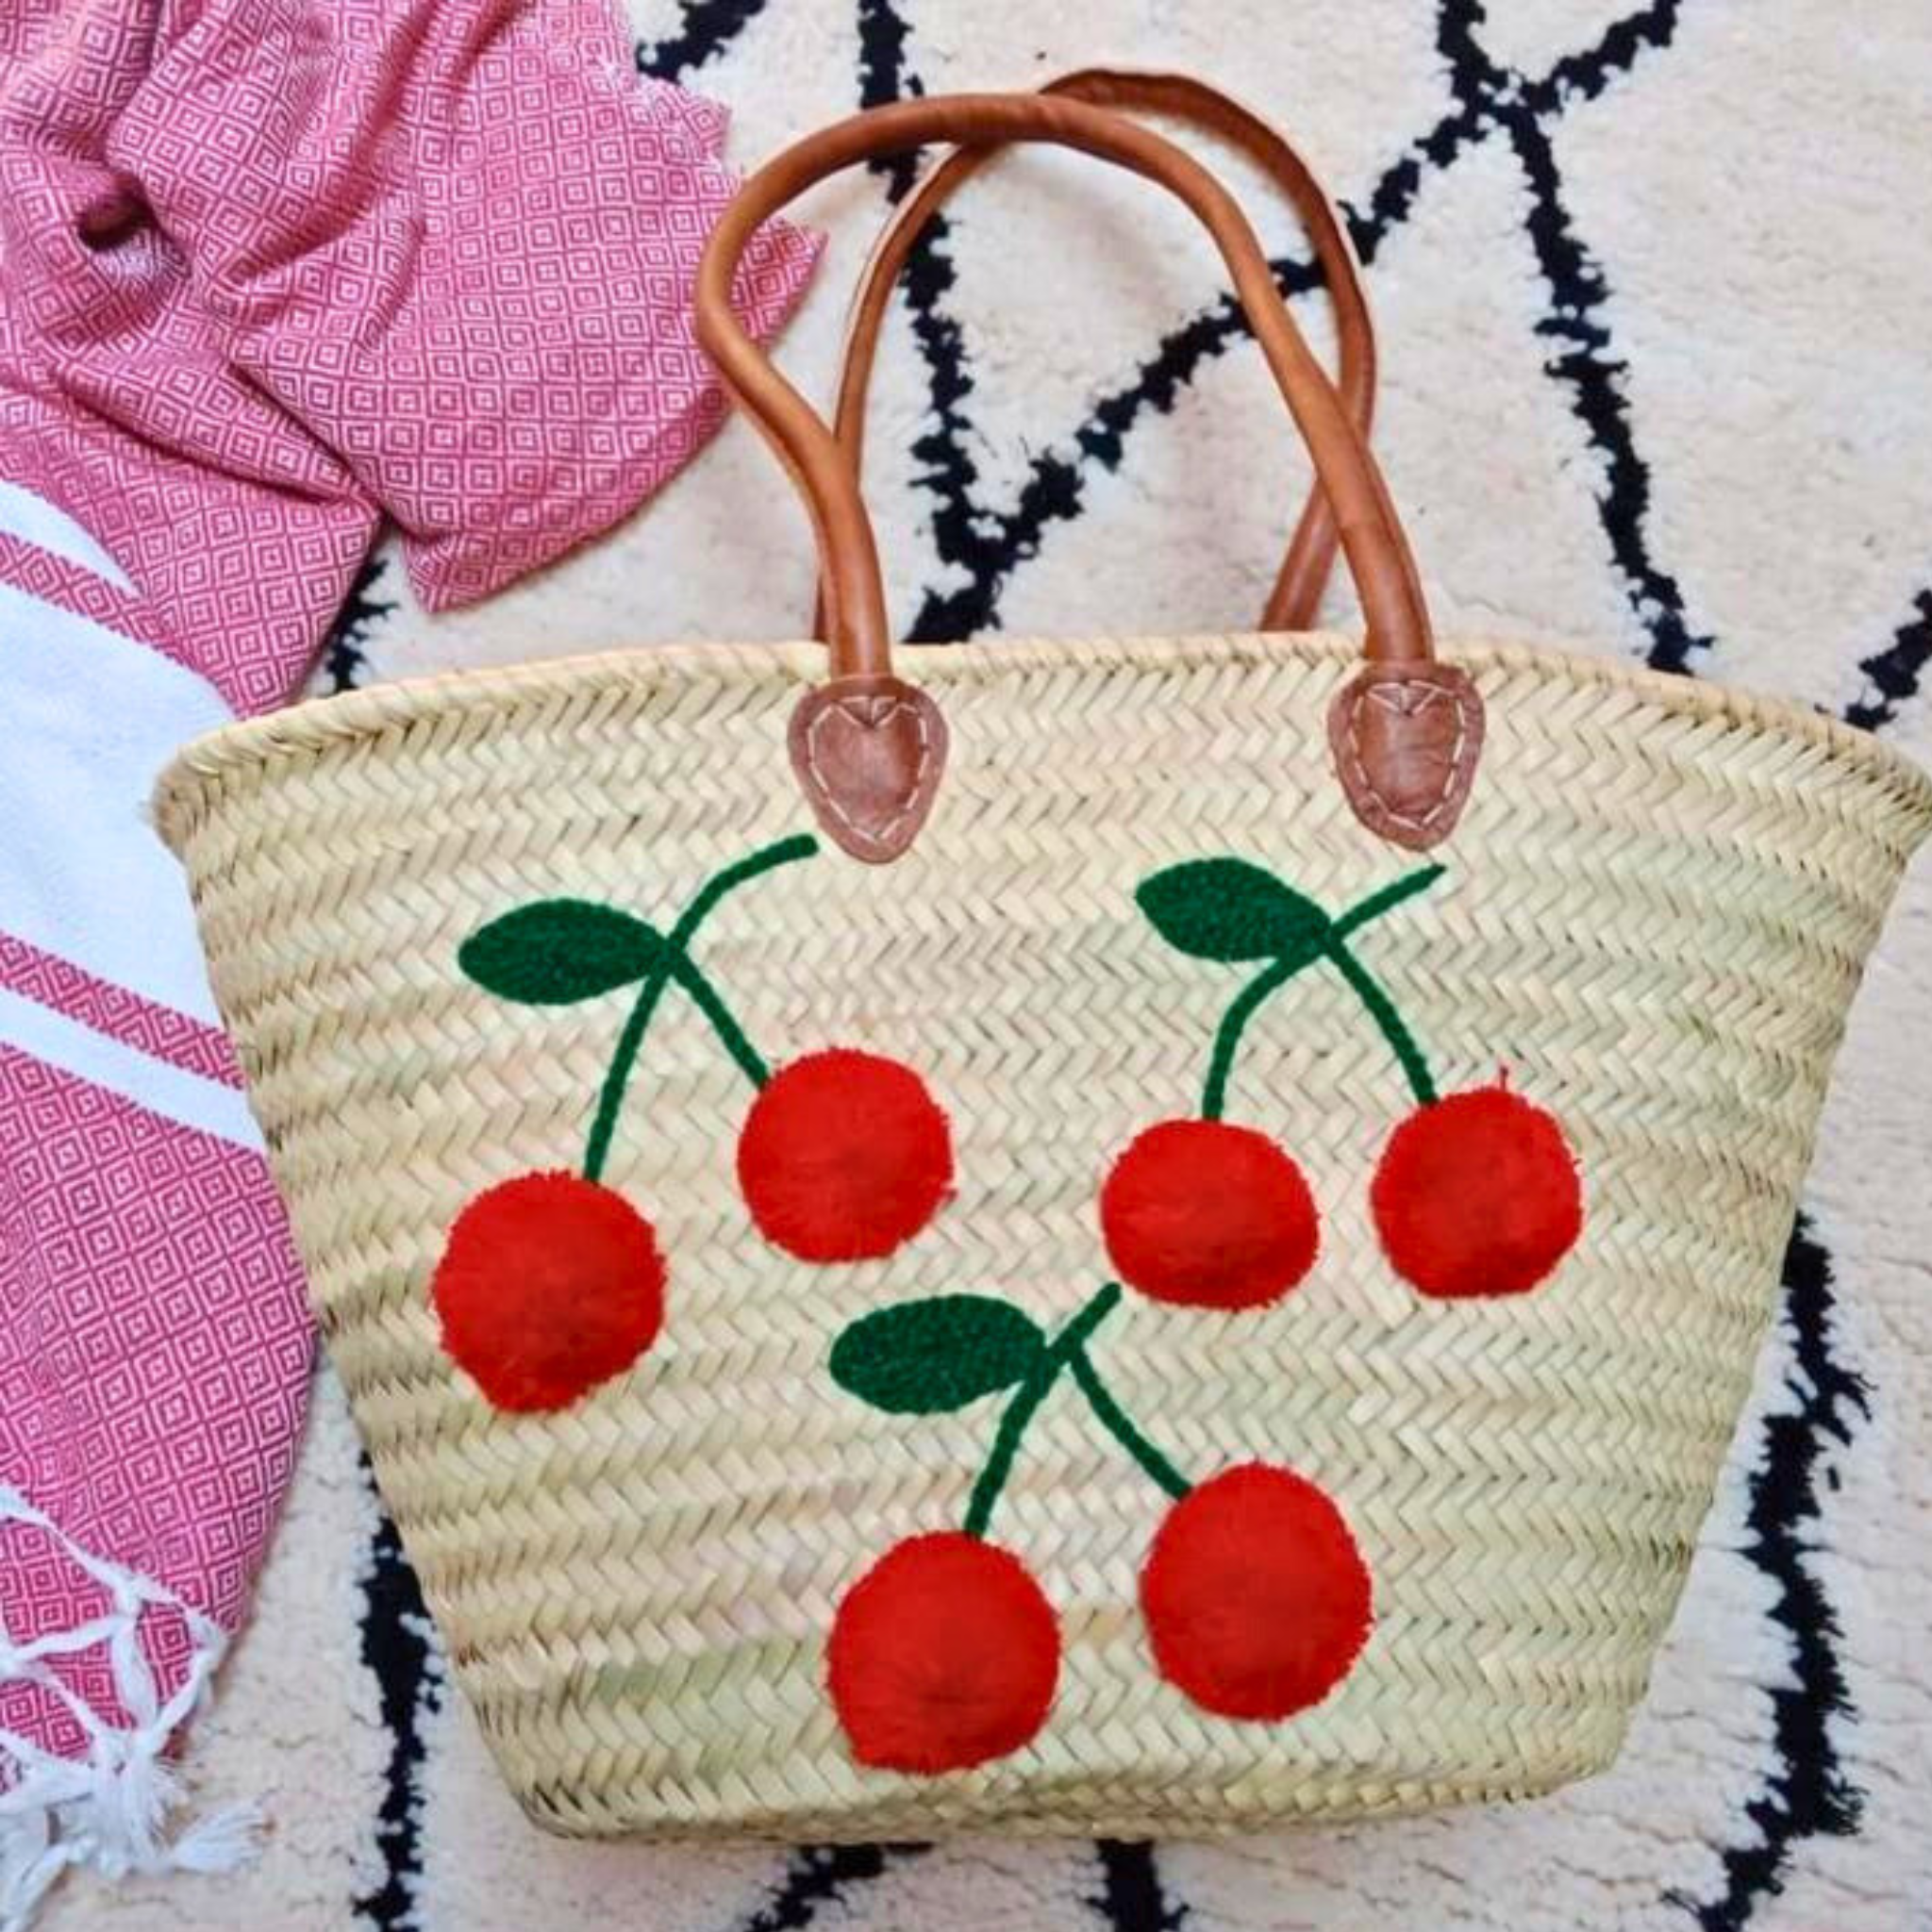 Cherry Market Basket Straw Bag